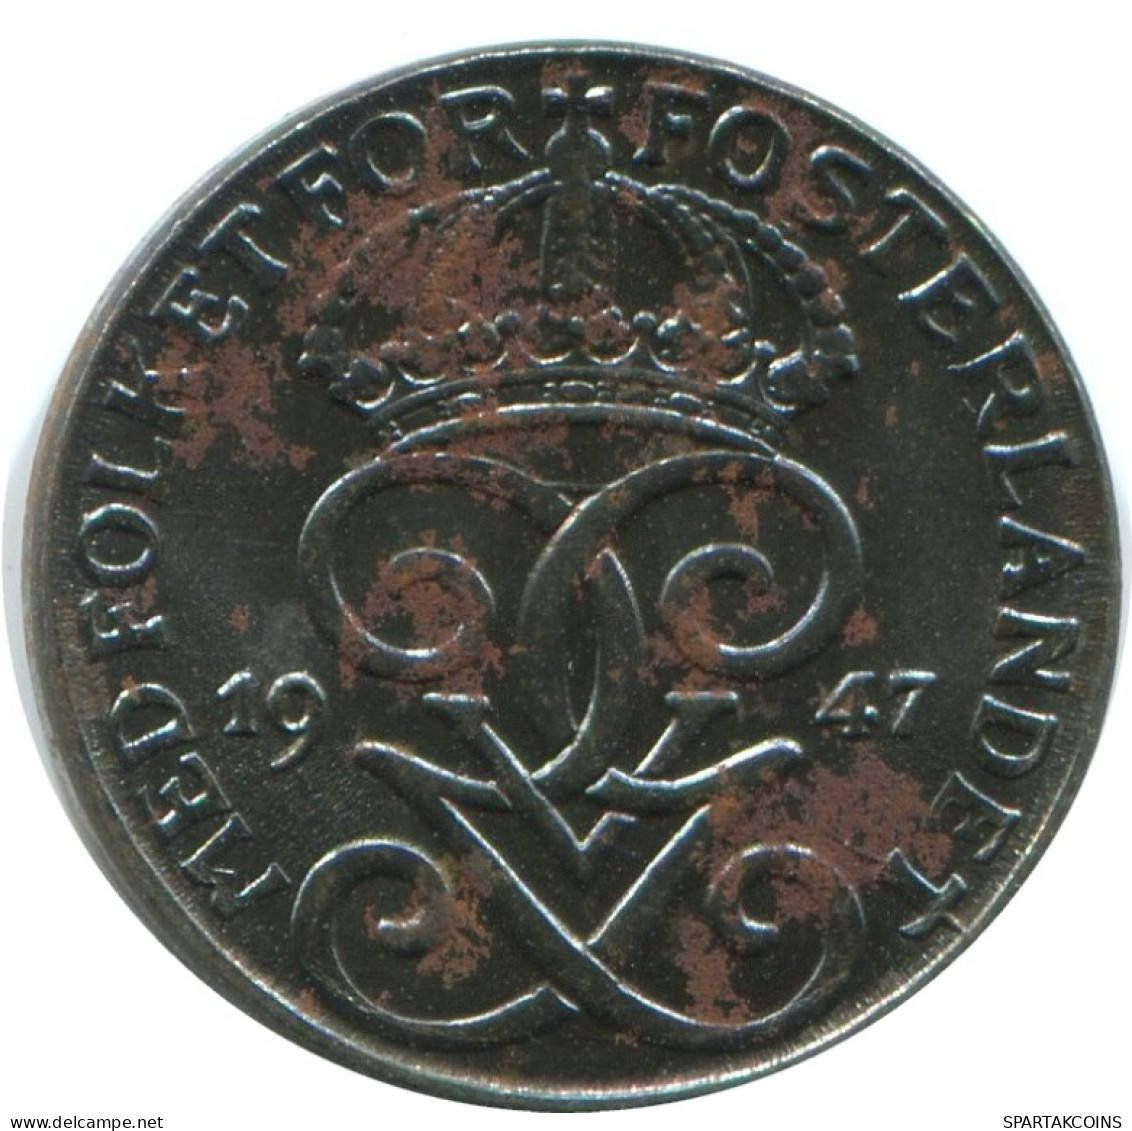 1 ORE 1947 SWEDEN Coin #AD367.2.U.A - Sweden